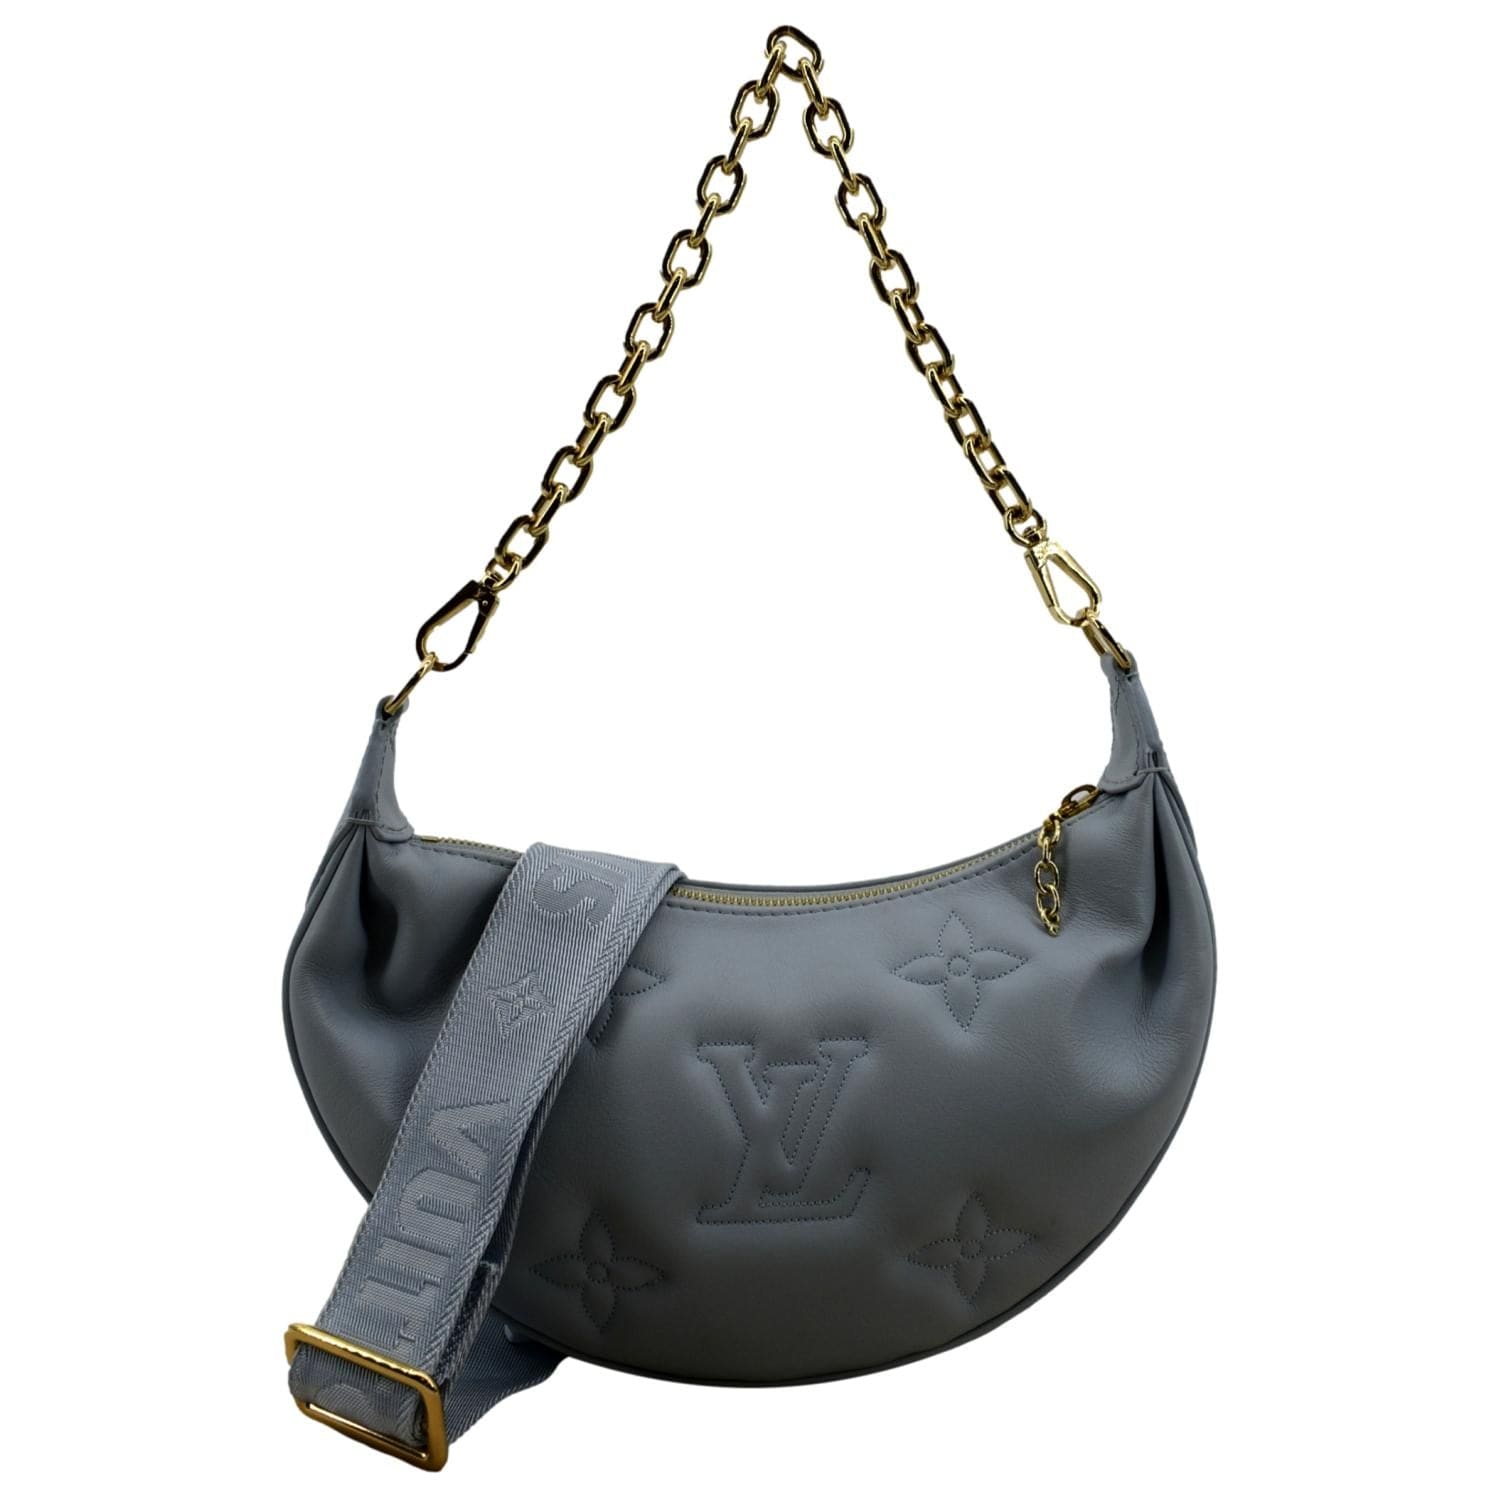 Louis Vuitton Black Leather Over The Moon Monogram Crossbody Bag